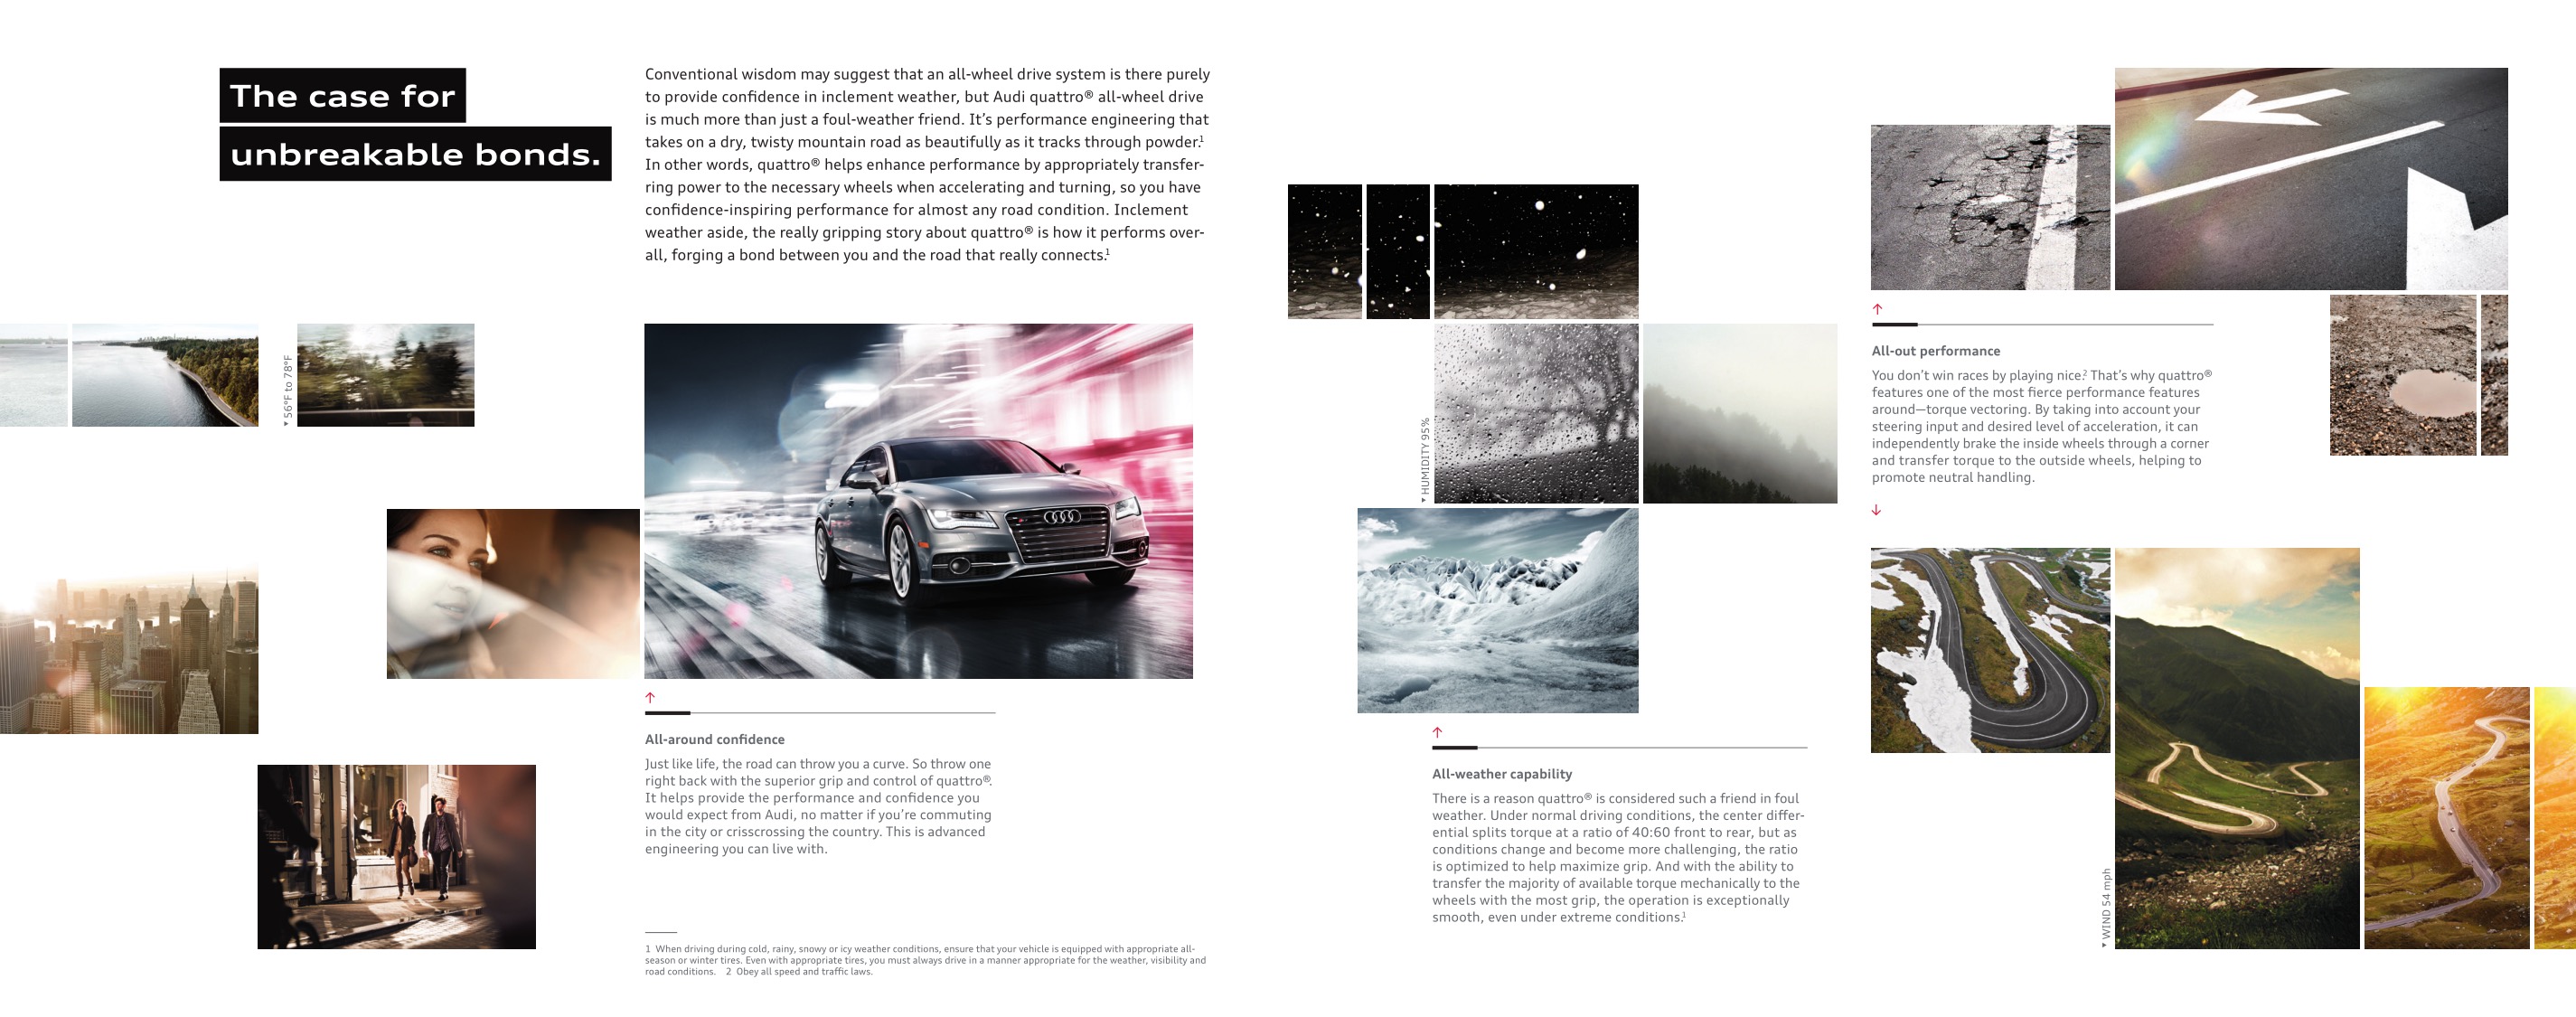 2014 Audi A7 Brochure Page 30